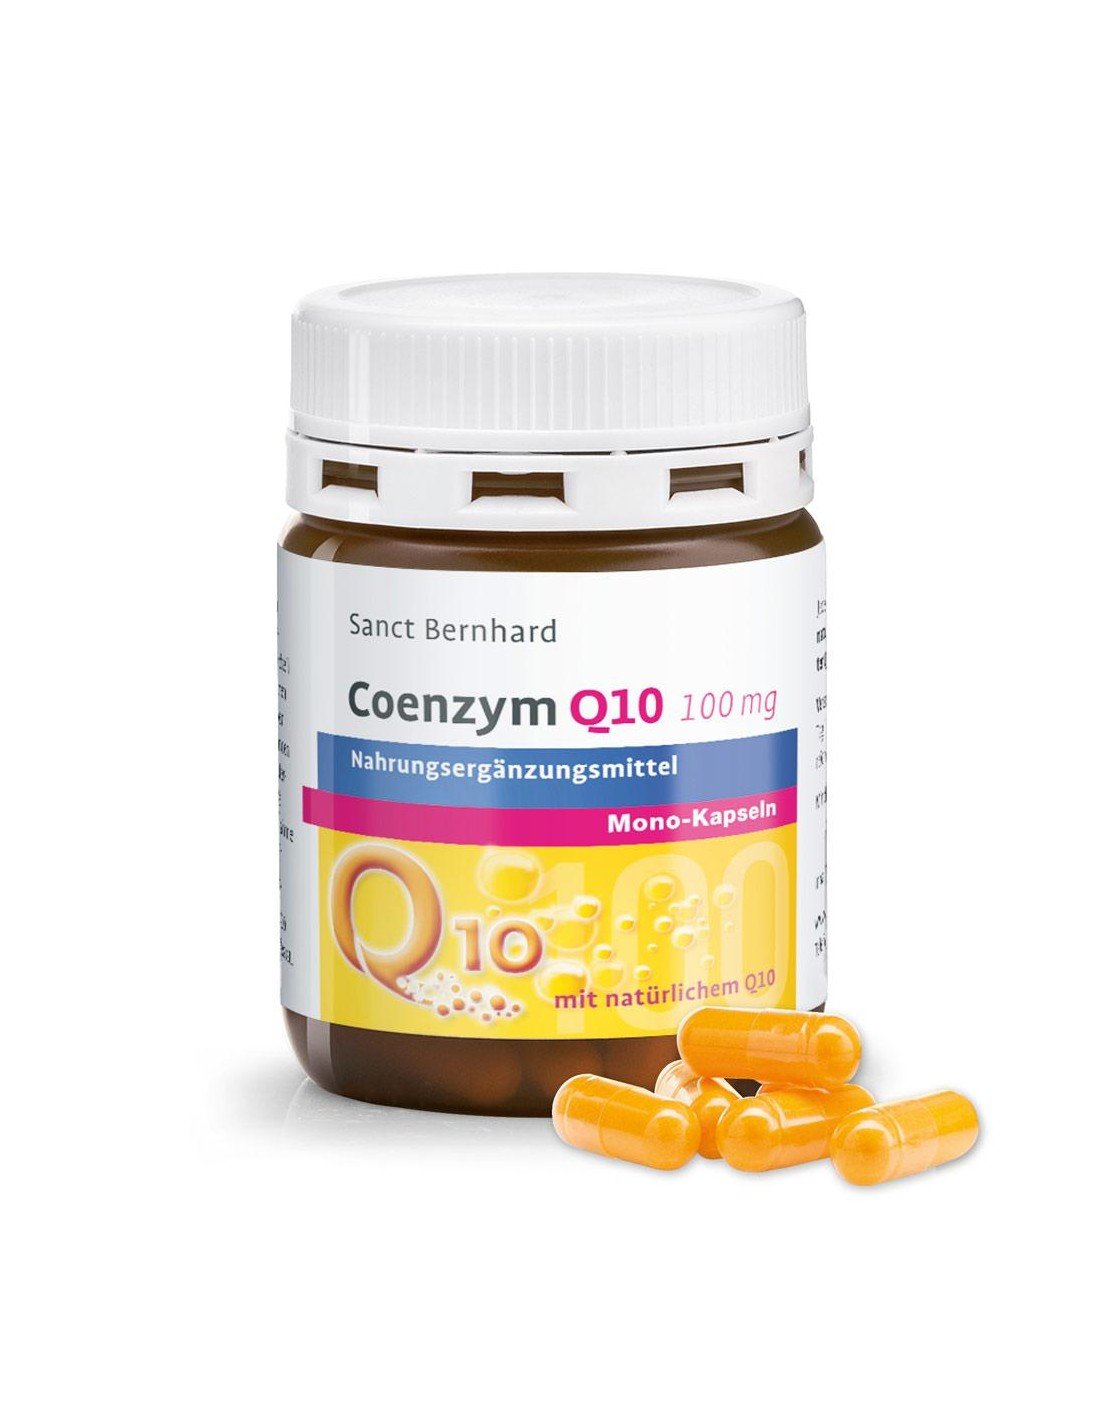 SANCT BERNHARD COENZYM Q10 kofermentas Q10 100 mg, 90 kapsulių - Maisto papildai Sveikata1.lt